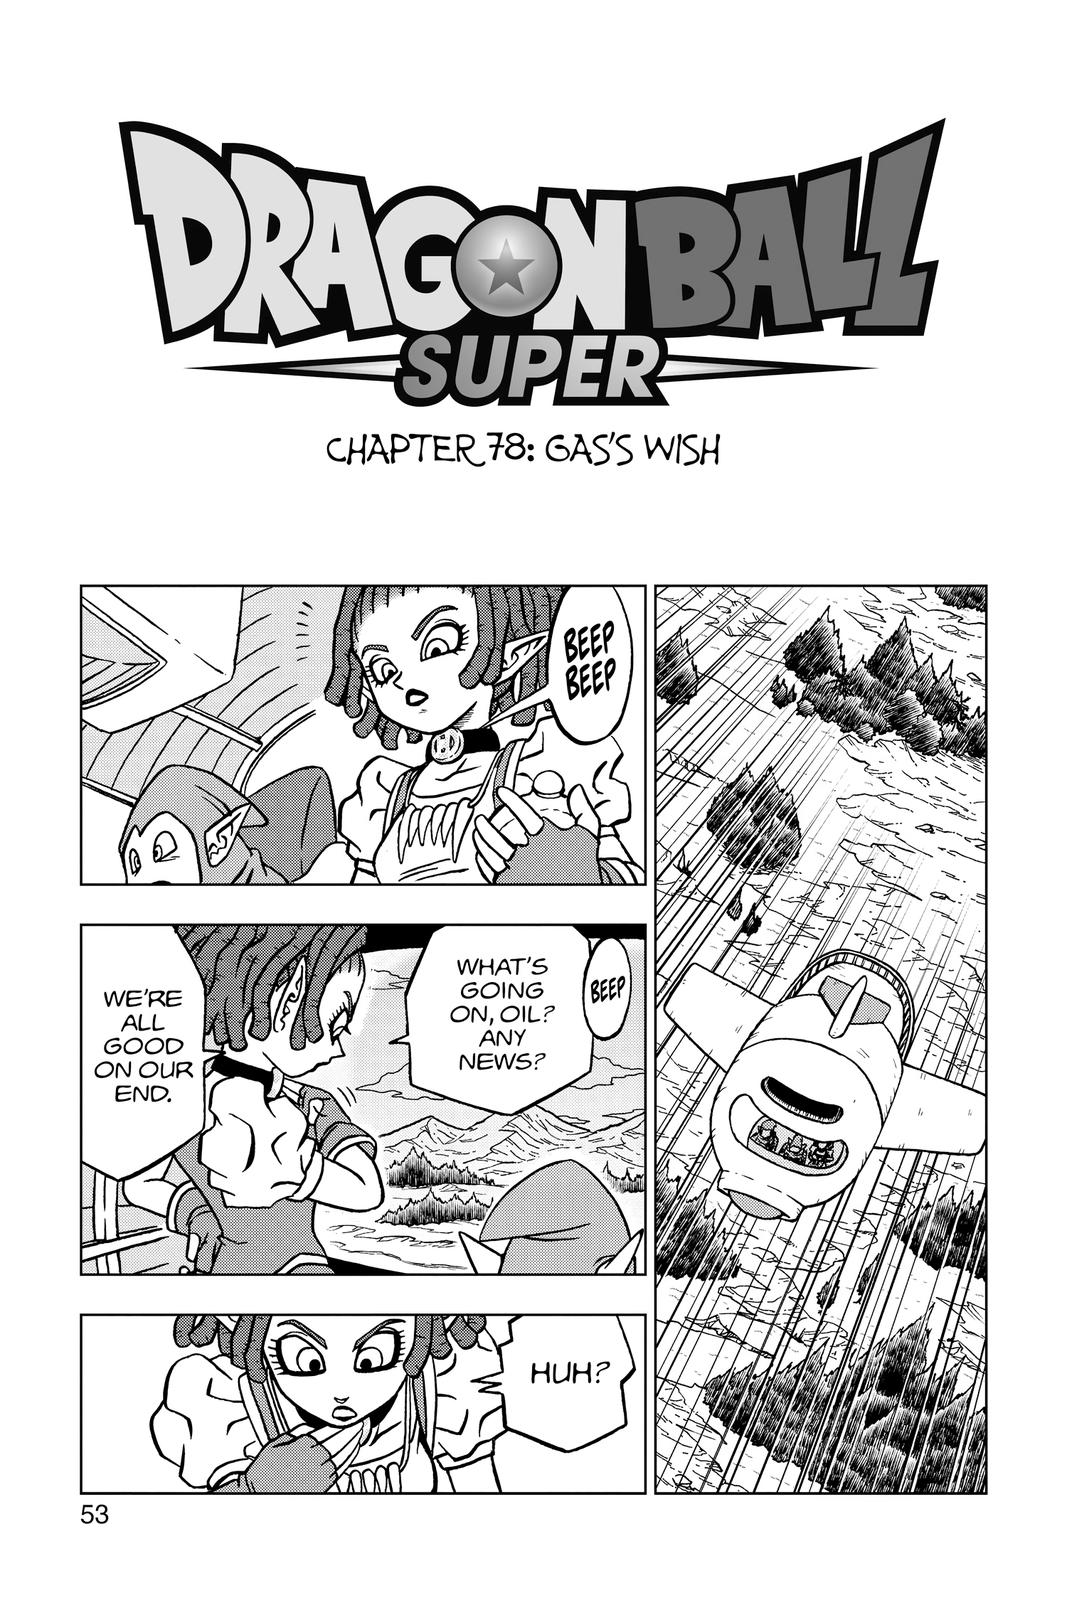 News  Dragon Ball Super Manga Chapter 70 Released